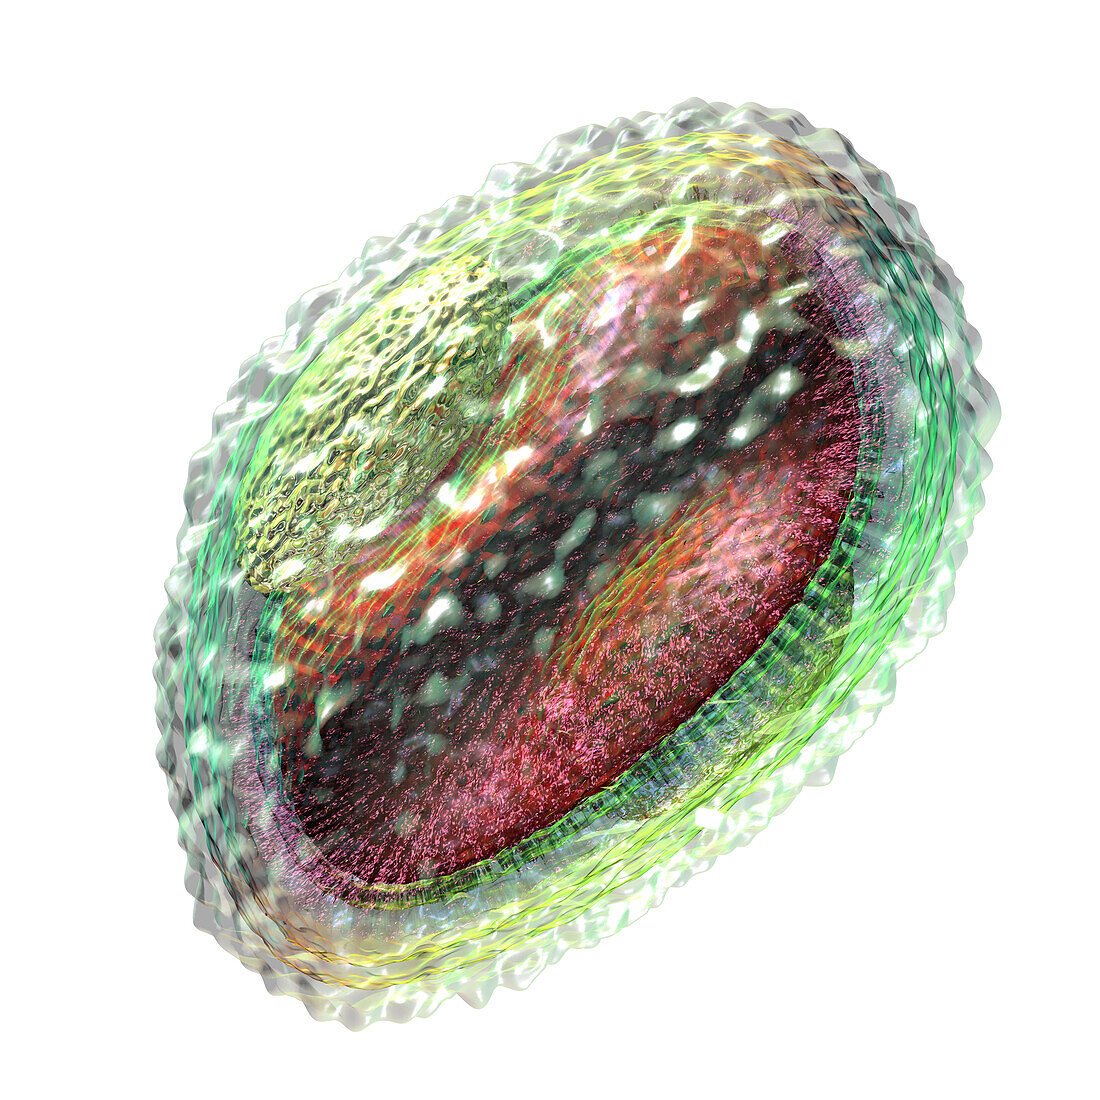 Pox virus particle, illustration